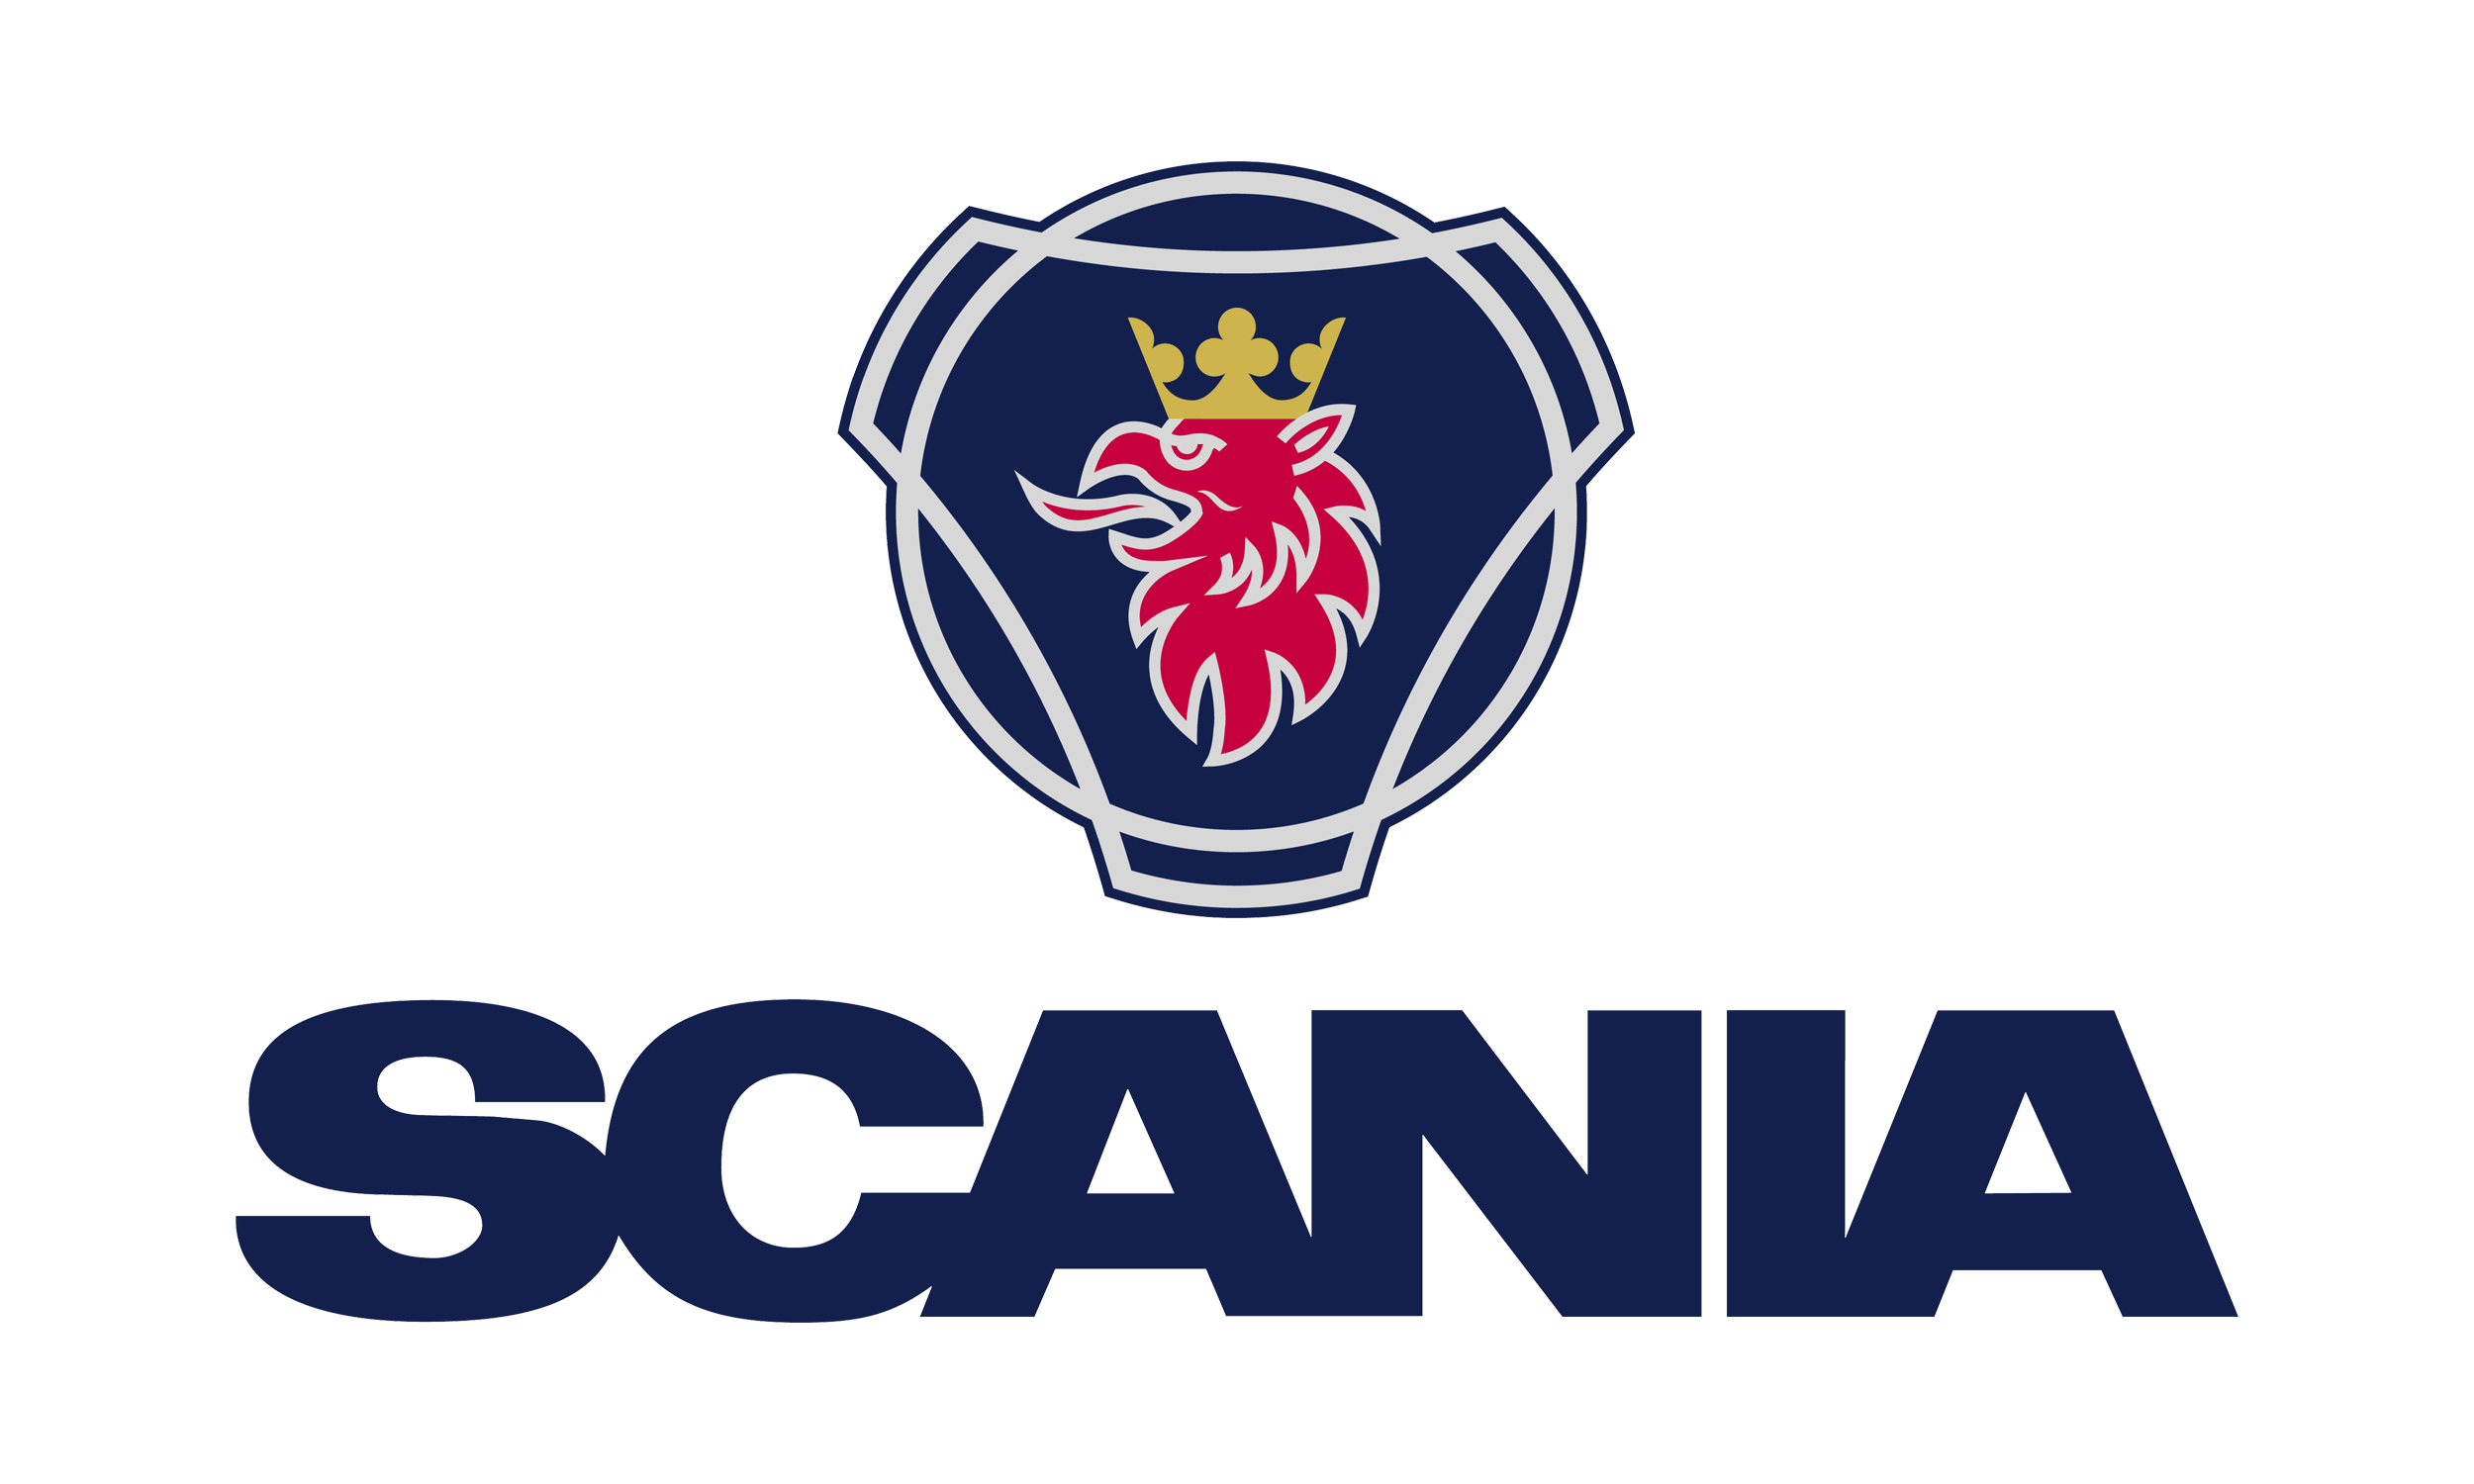 Scania car logo